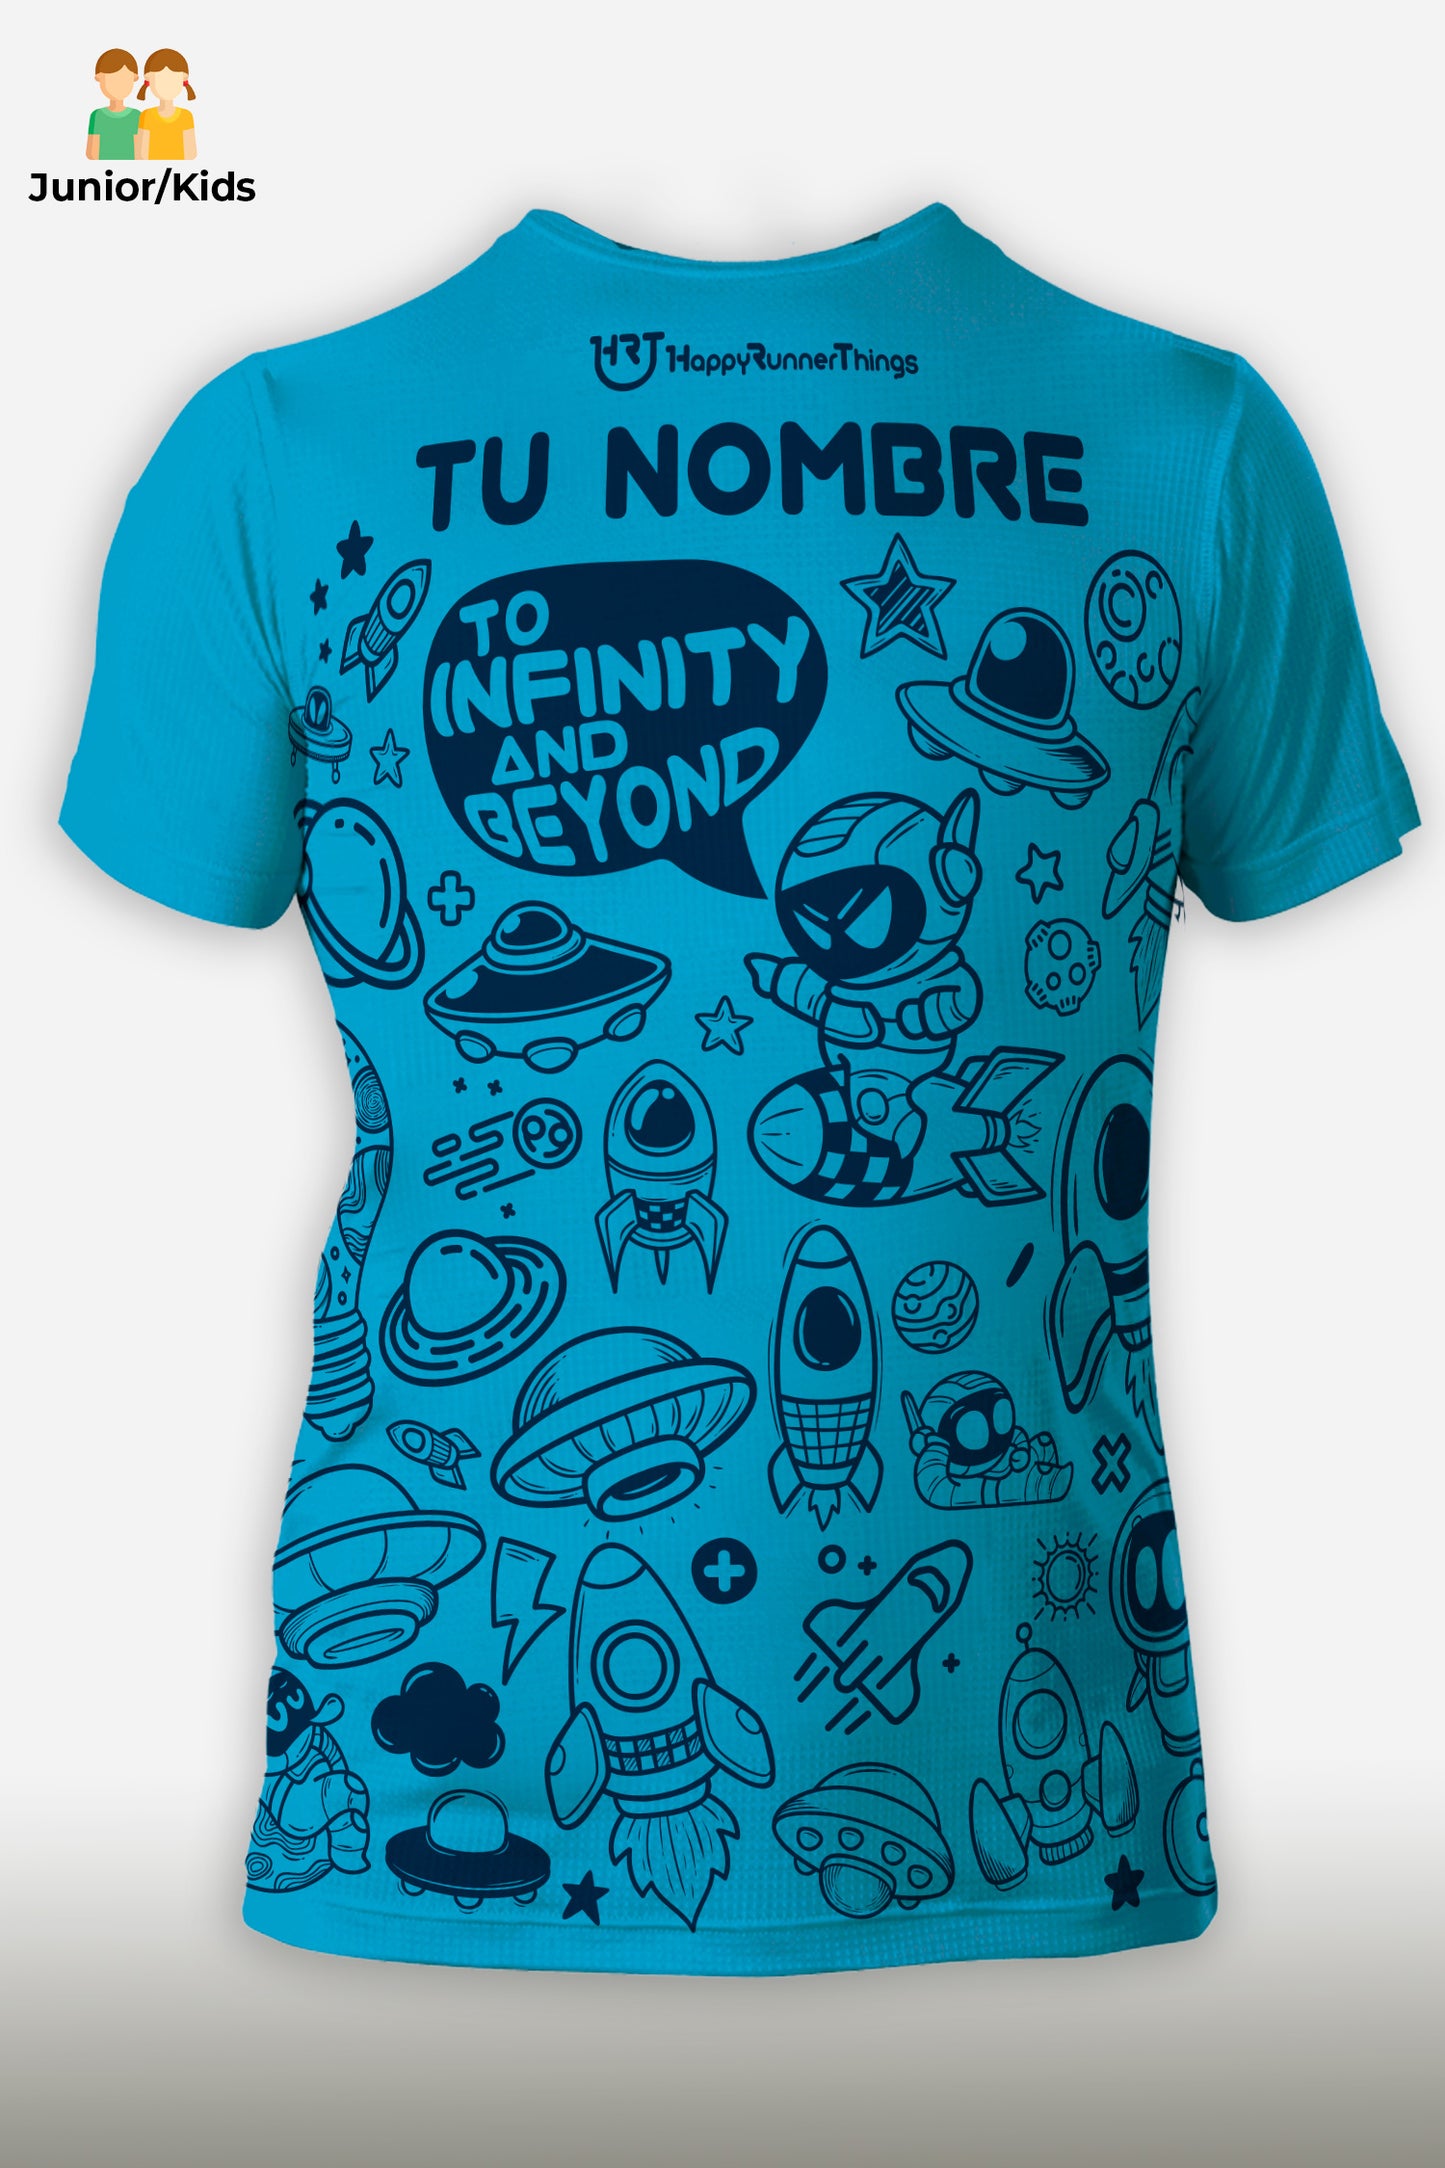 Need More Space - Camiseta Técnica Junior/Kids